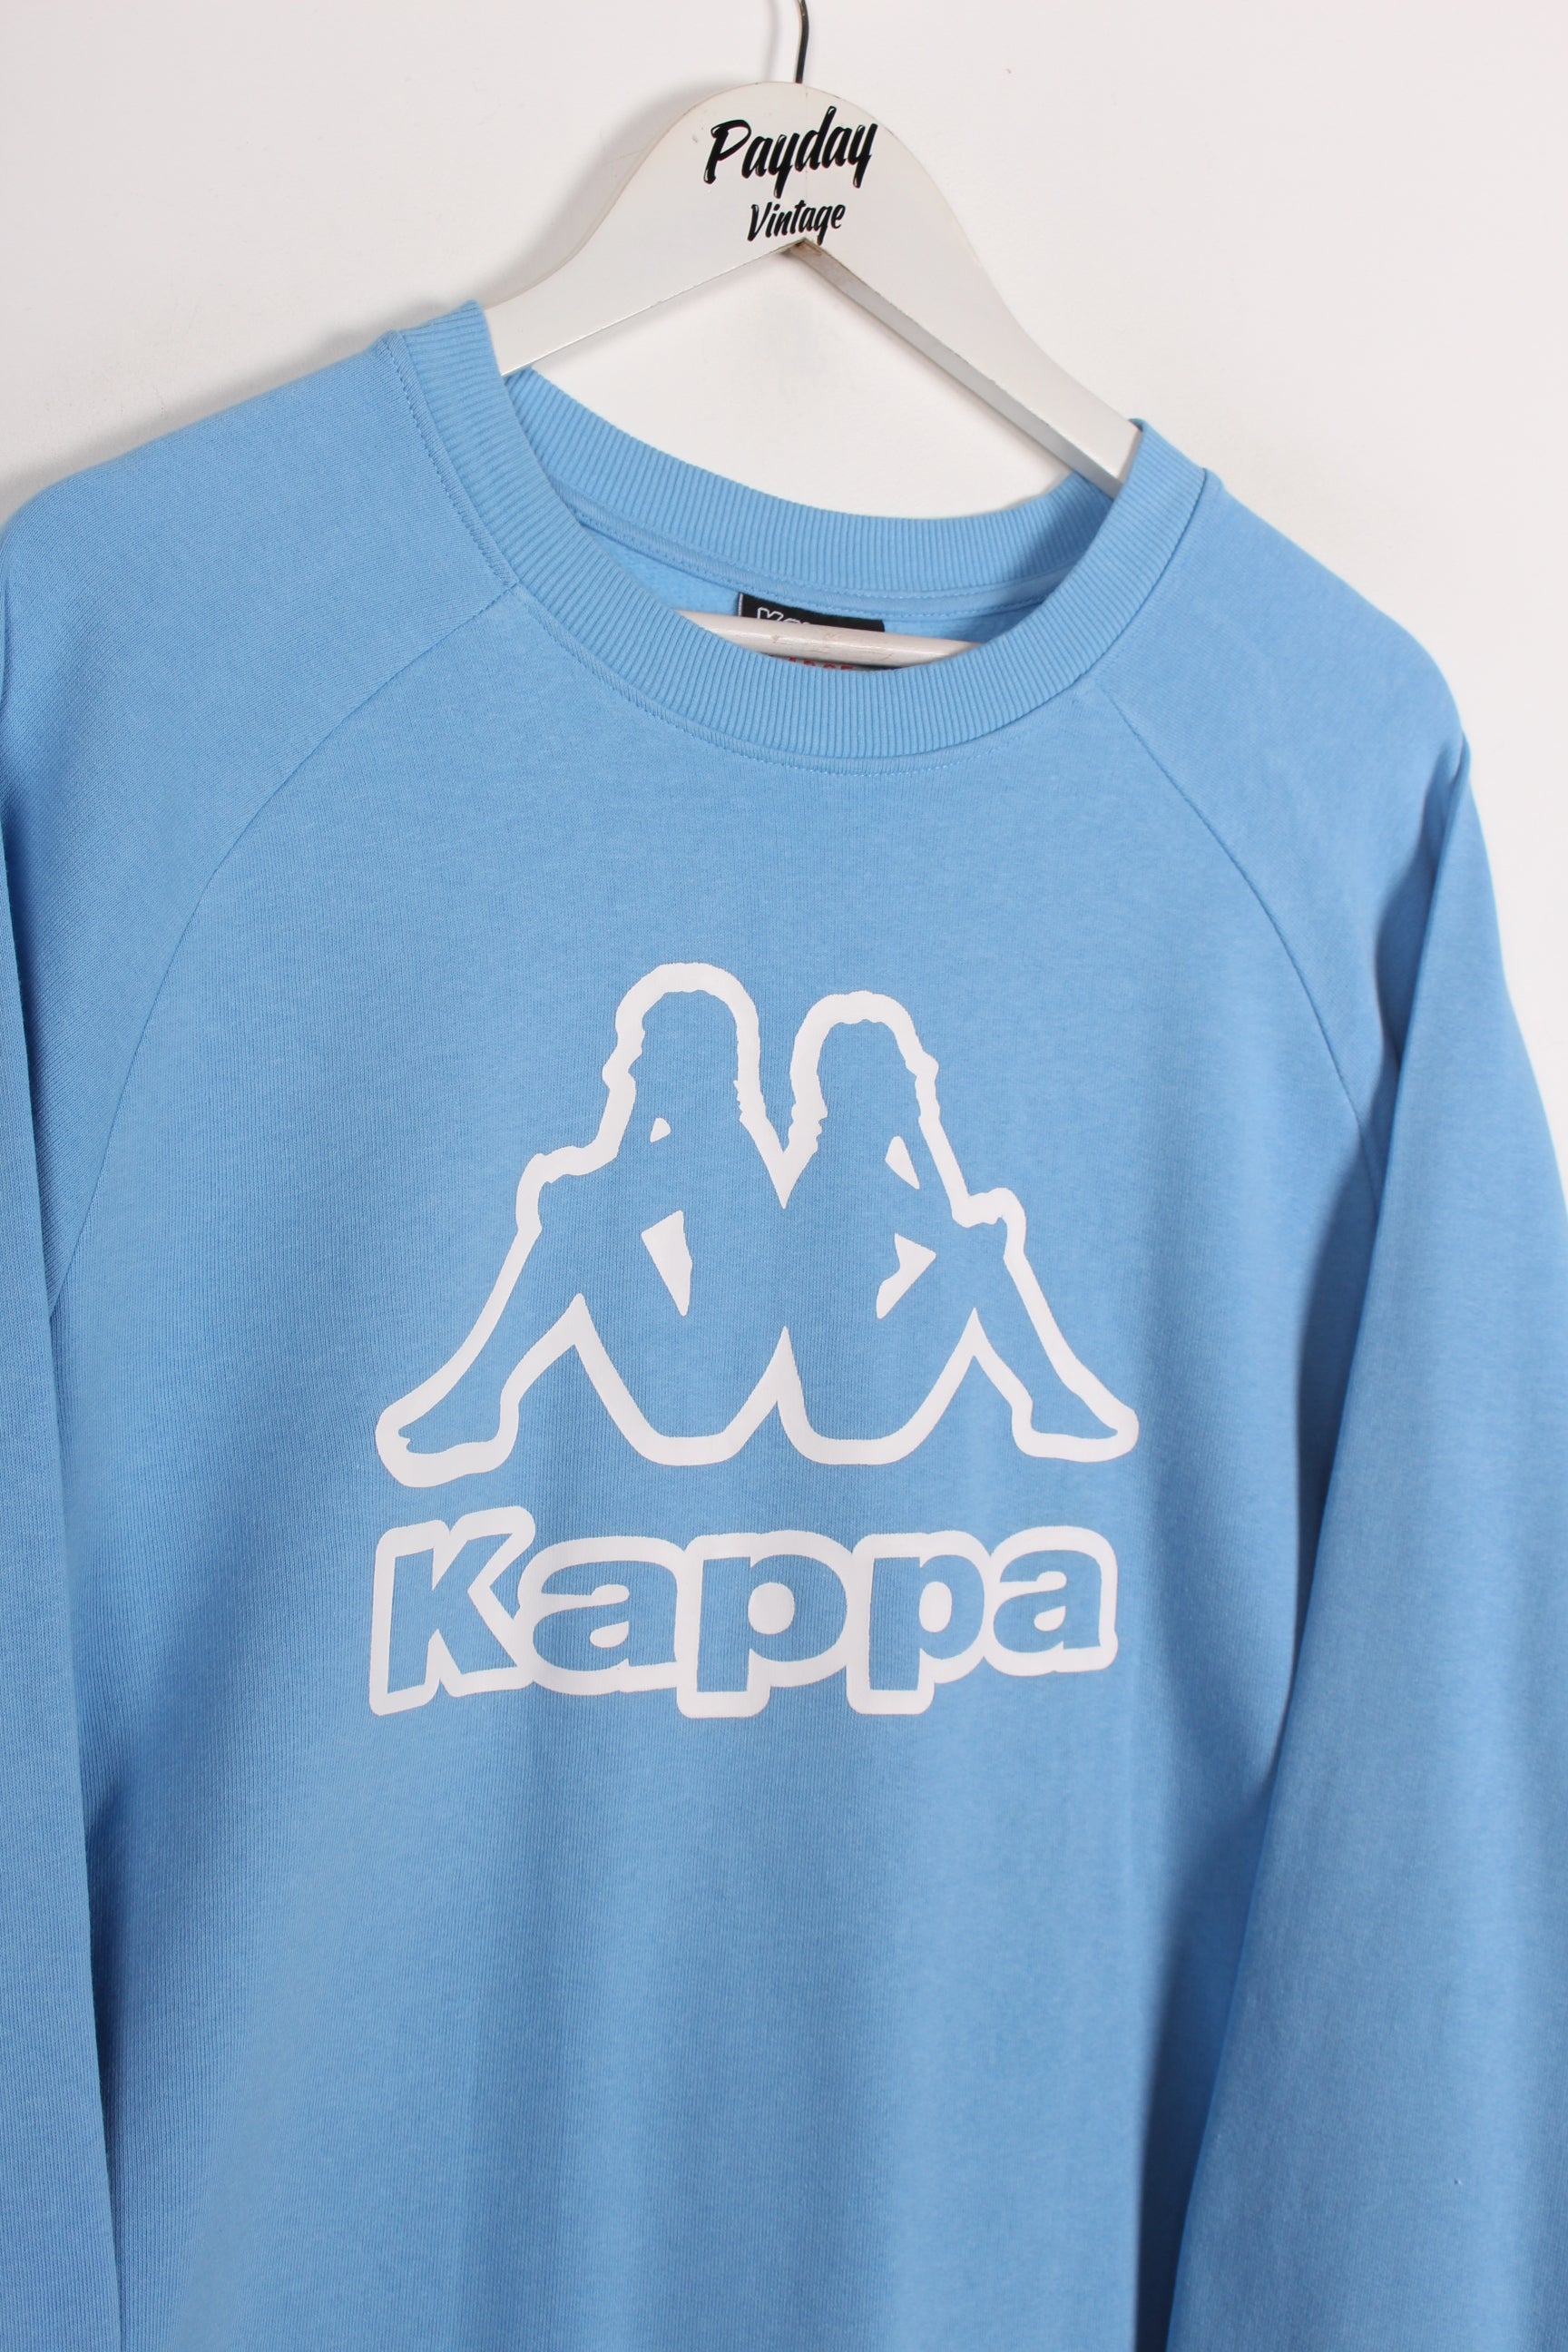 Kappa Sweatshirt Baby Blue Large – Vintage